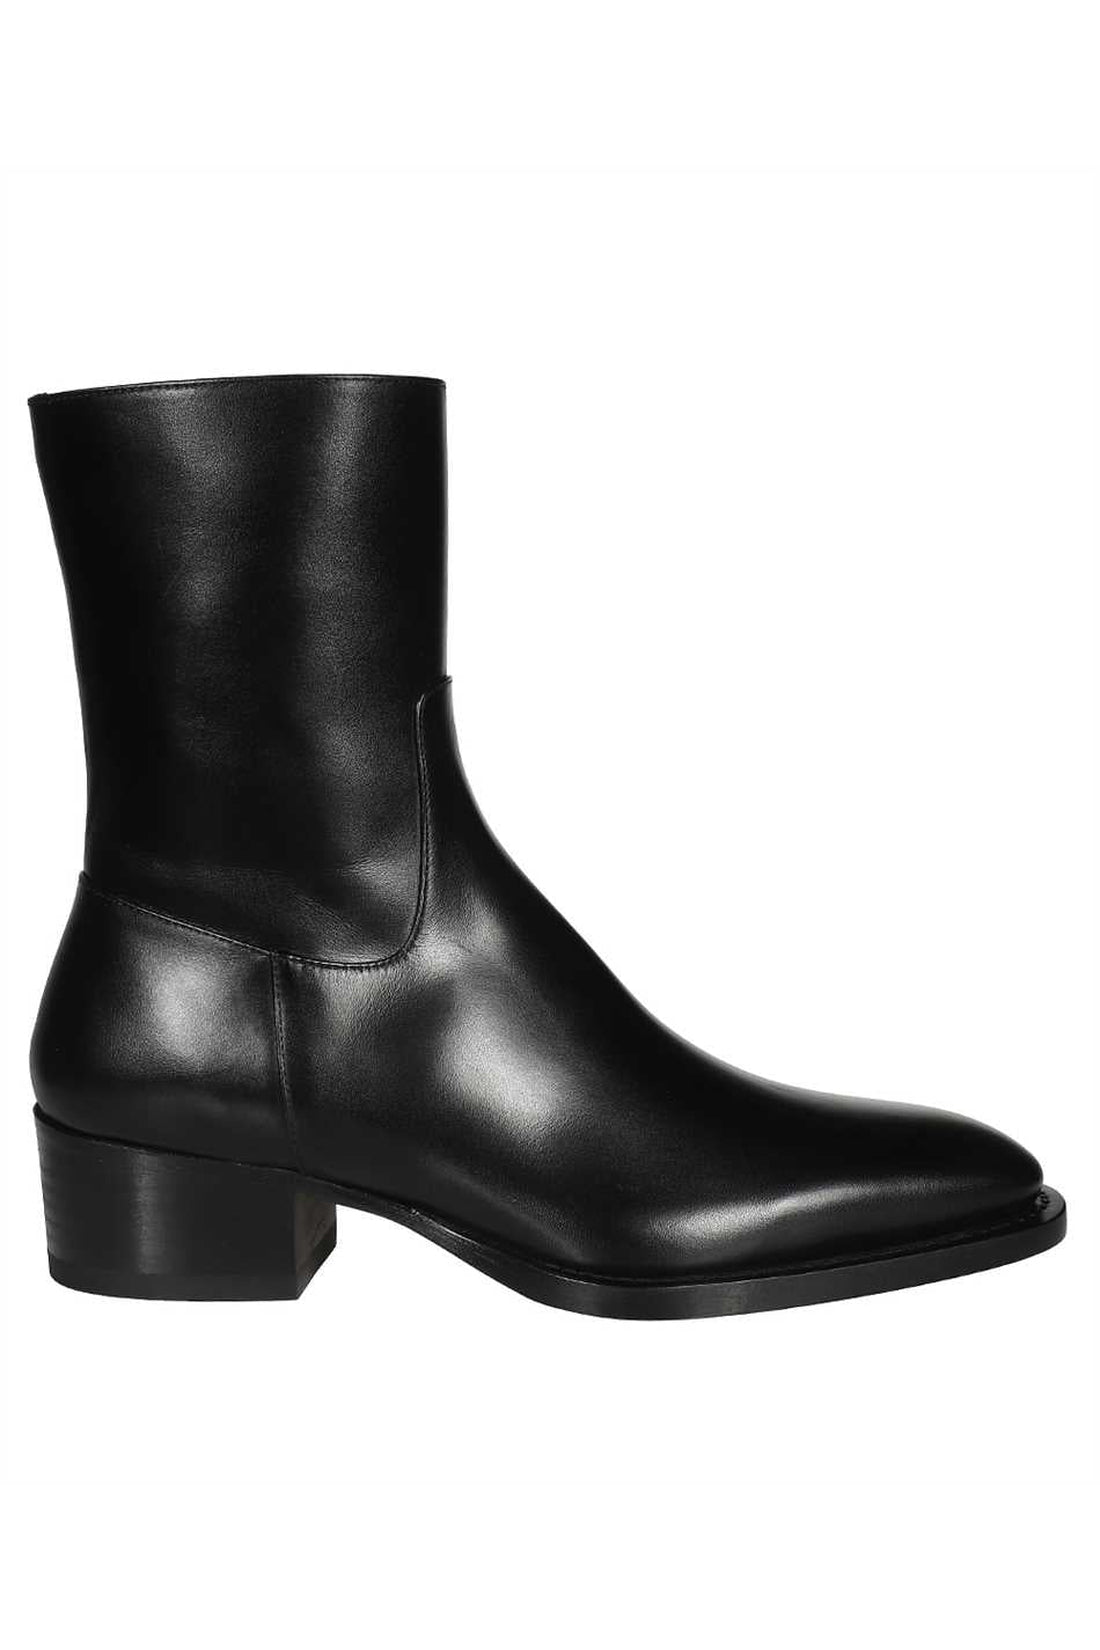 Dsquared2-OUTLET-SALE-Pierre leather ankle boots-ARCHIVIST